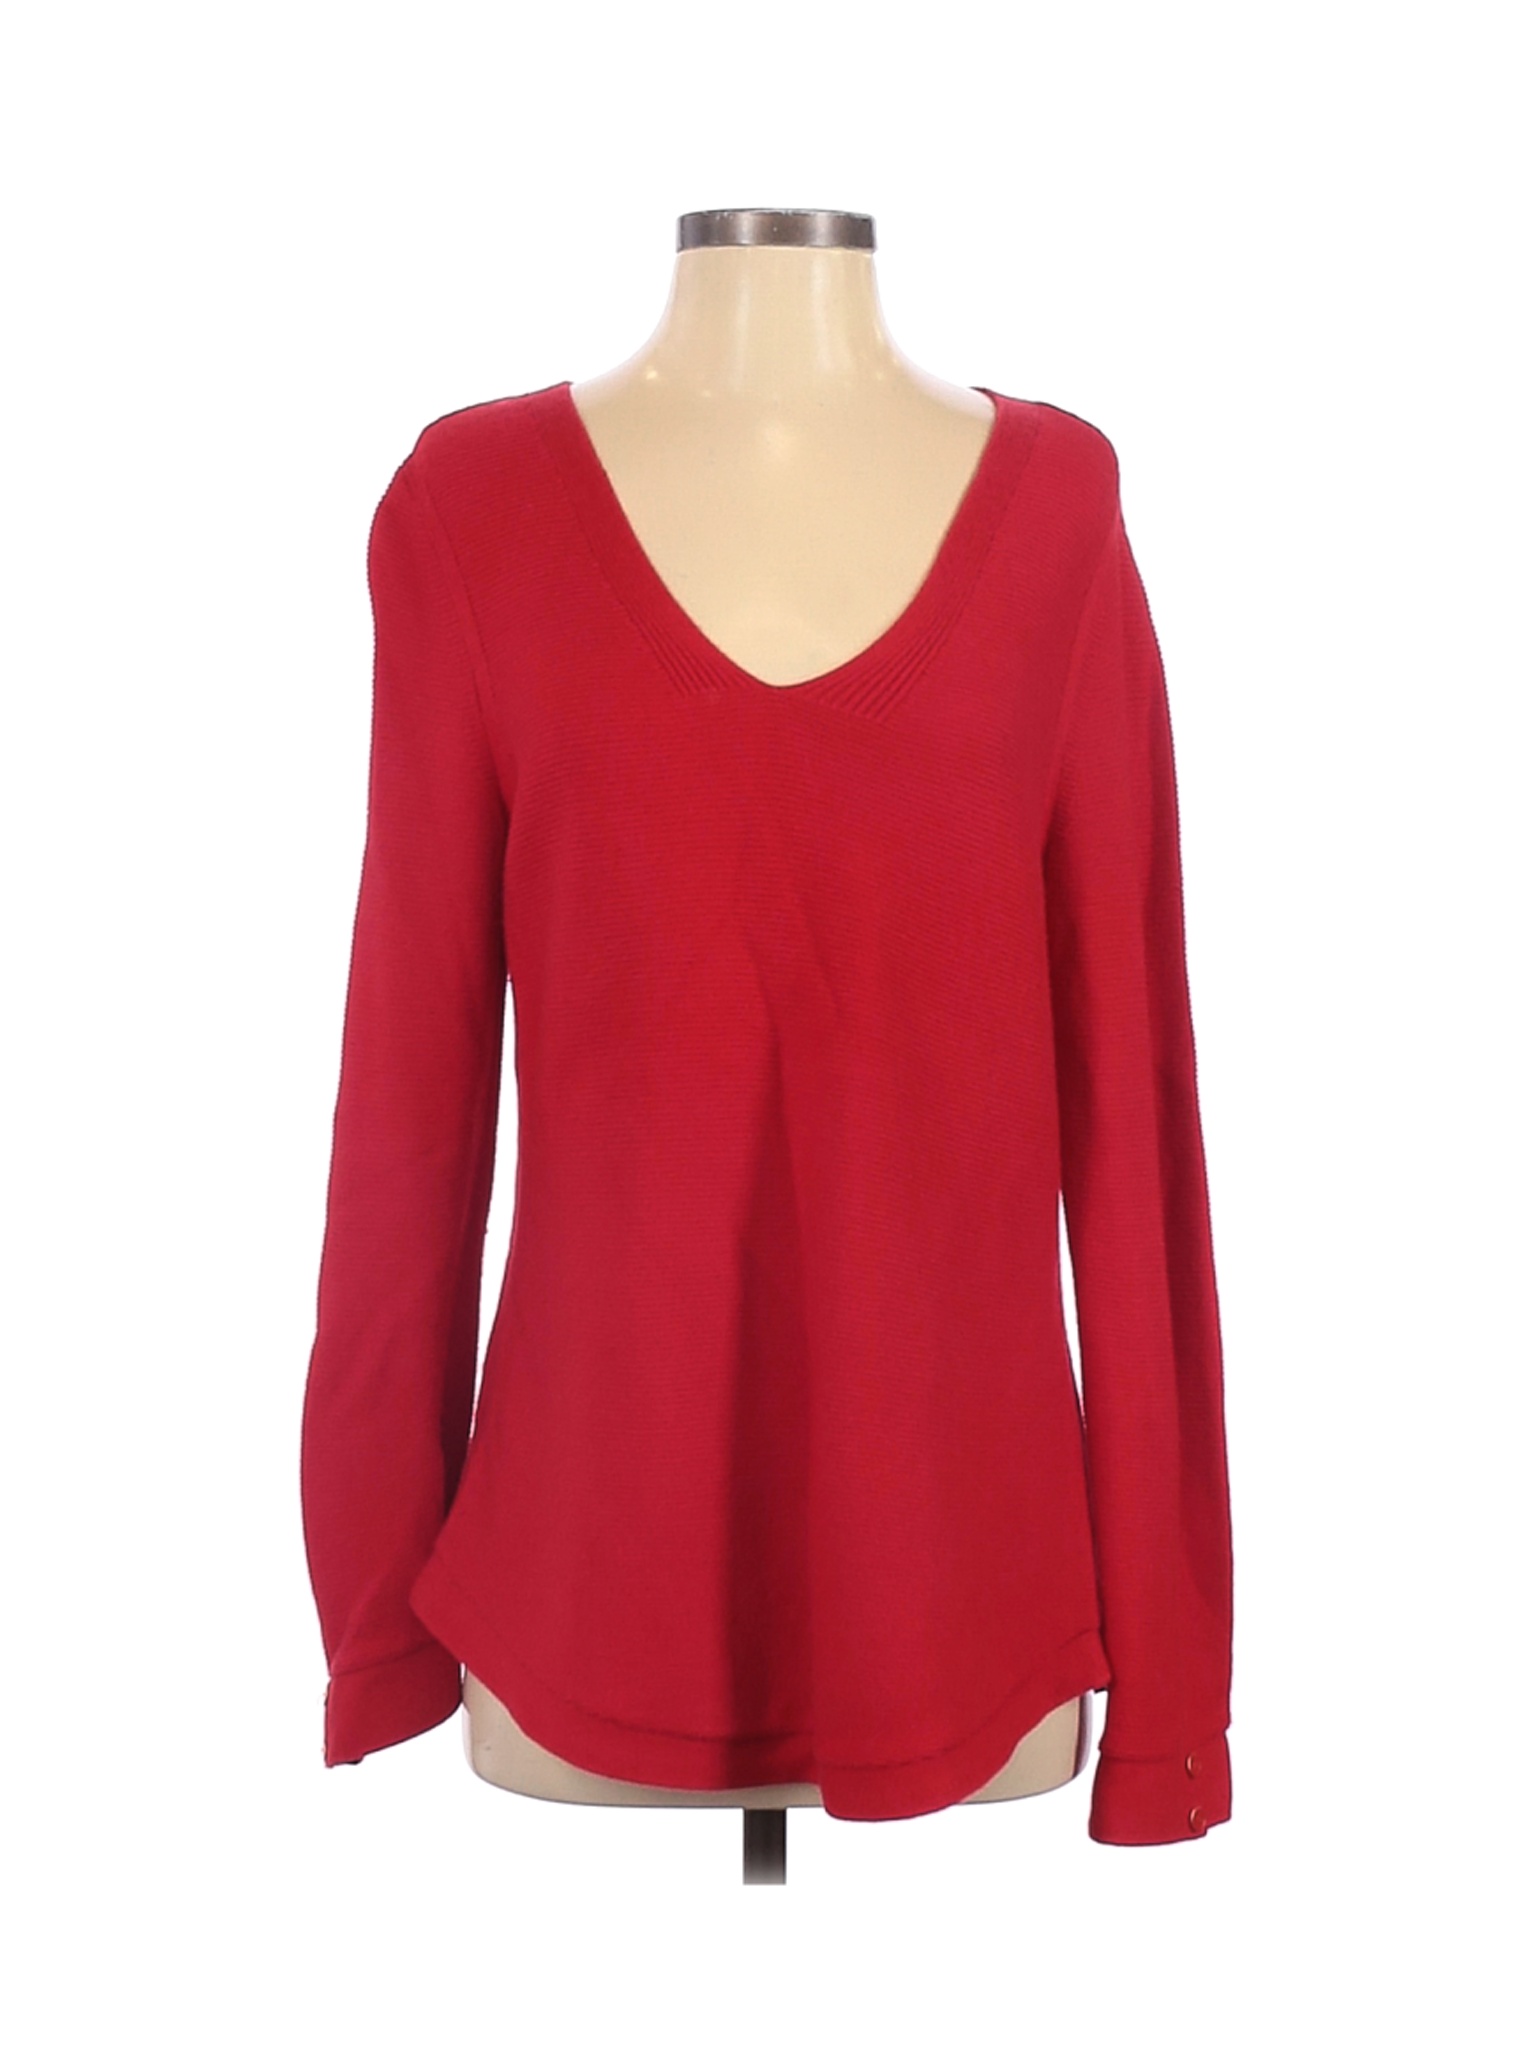 Talbots Women Red Pullover Sweater M | eBay